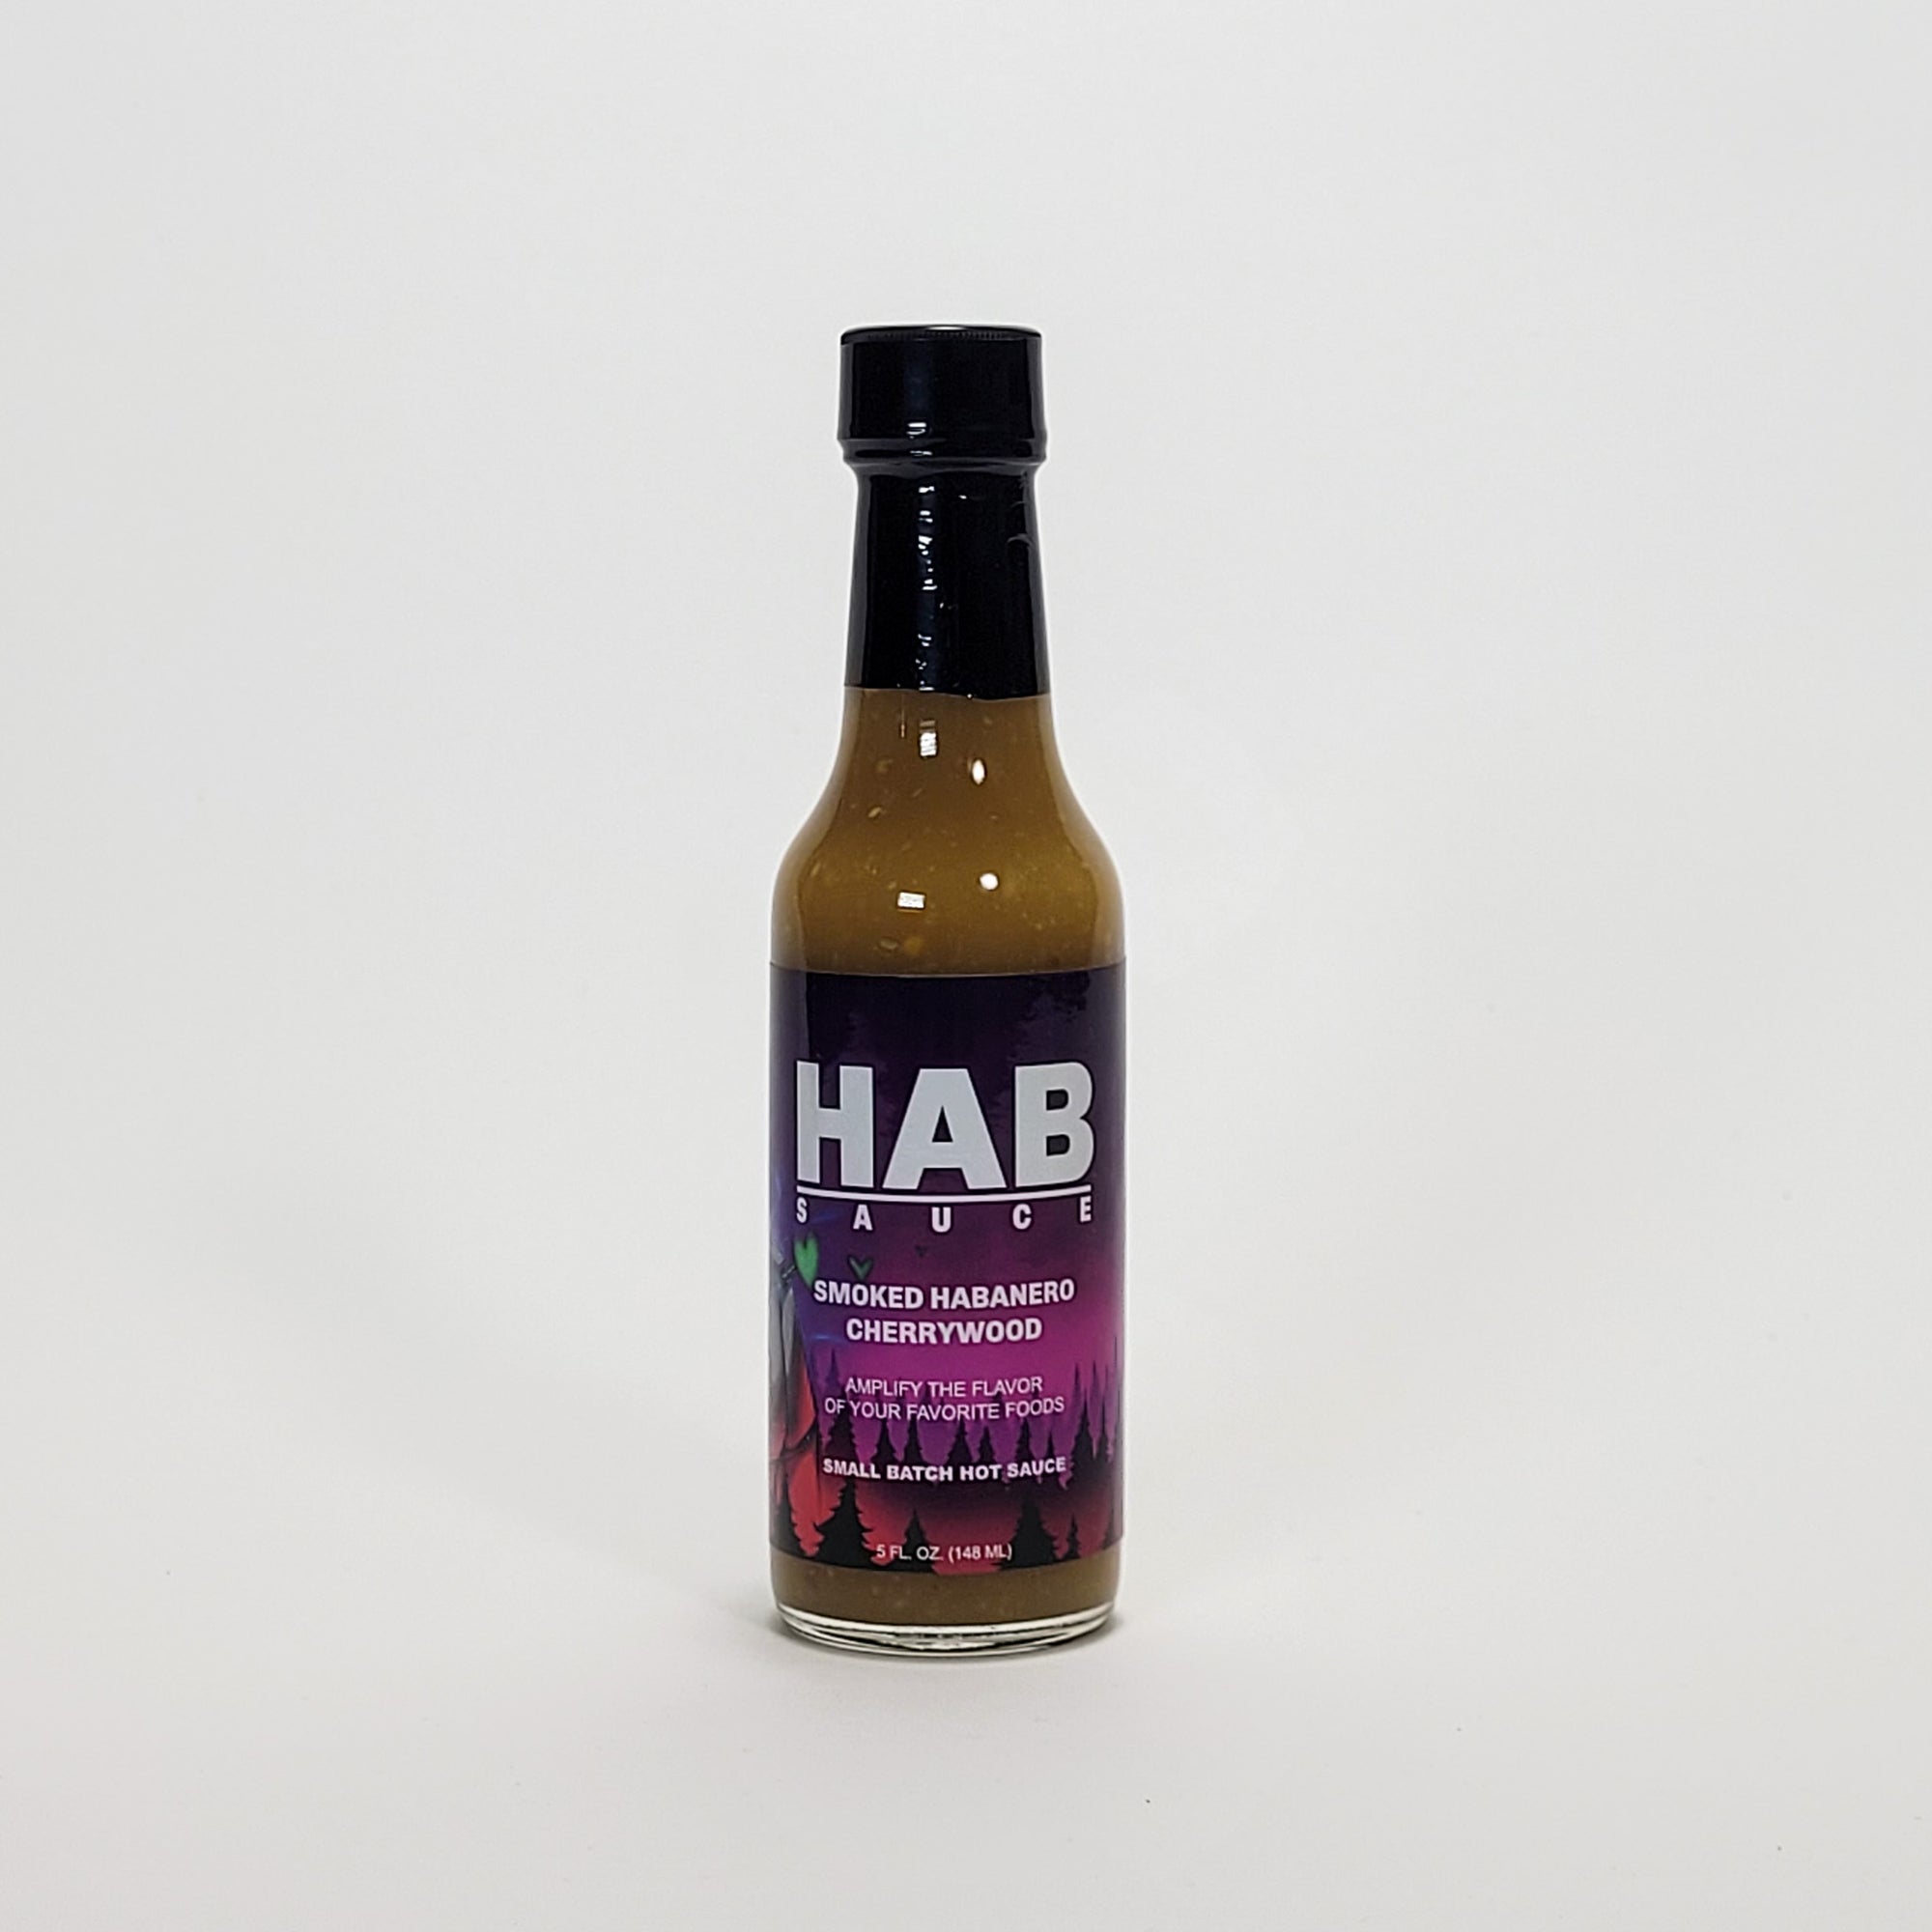 Hab Sauce Smoked Habanero Cherrywood hot sauce